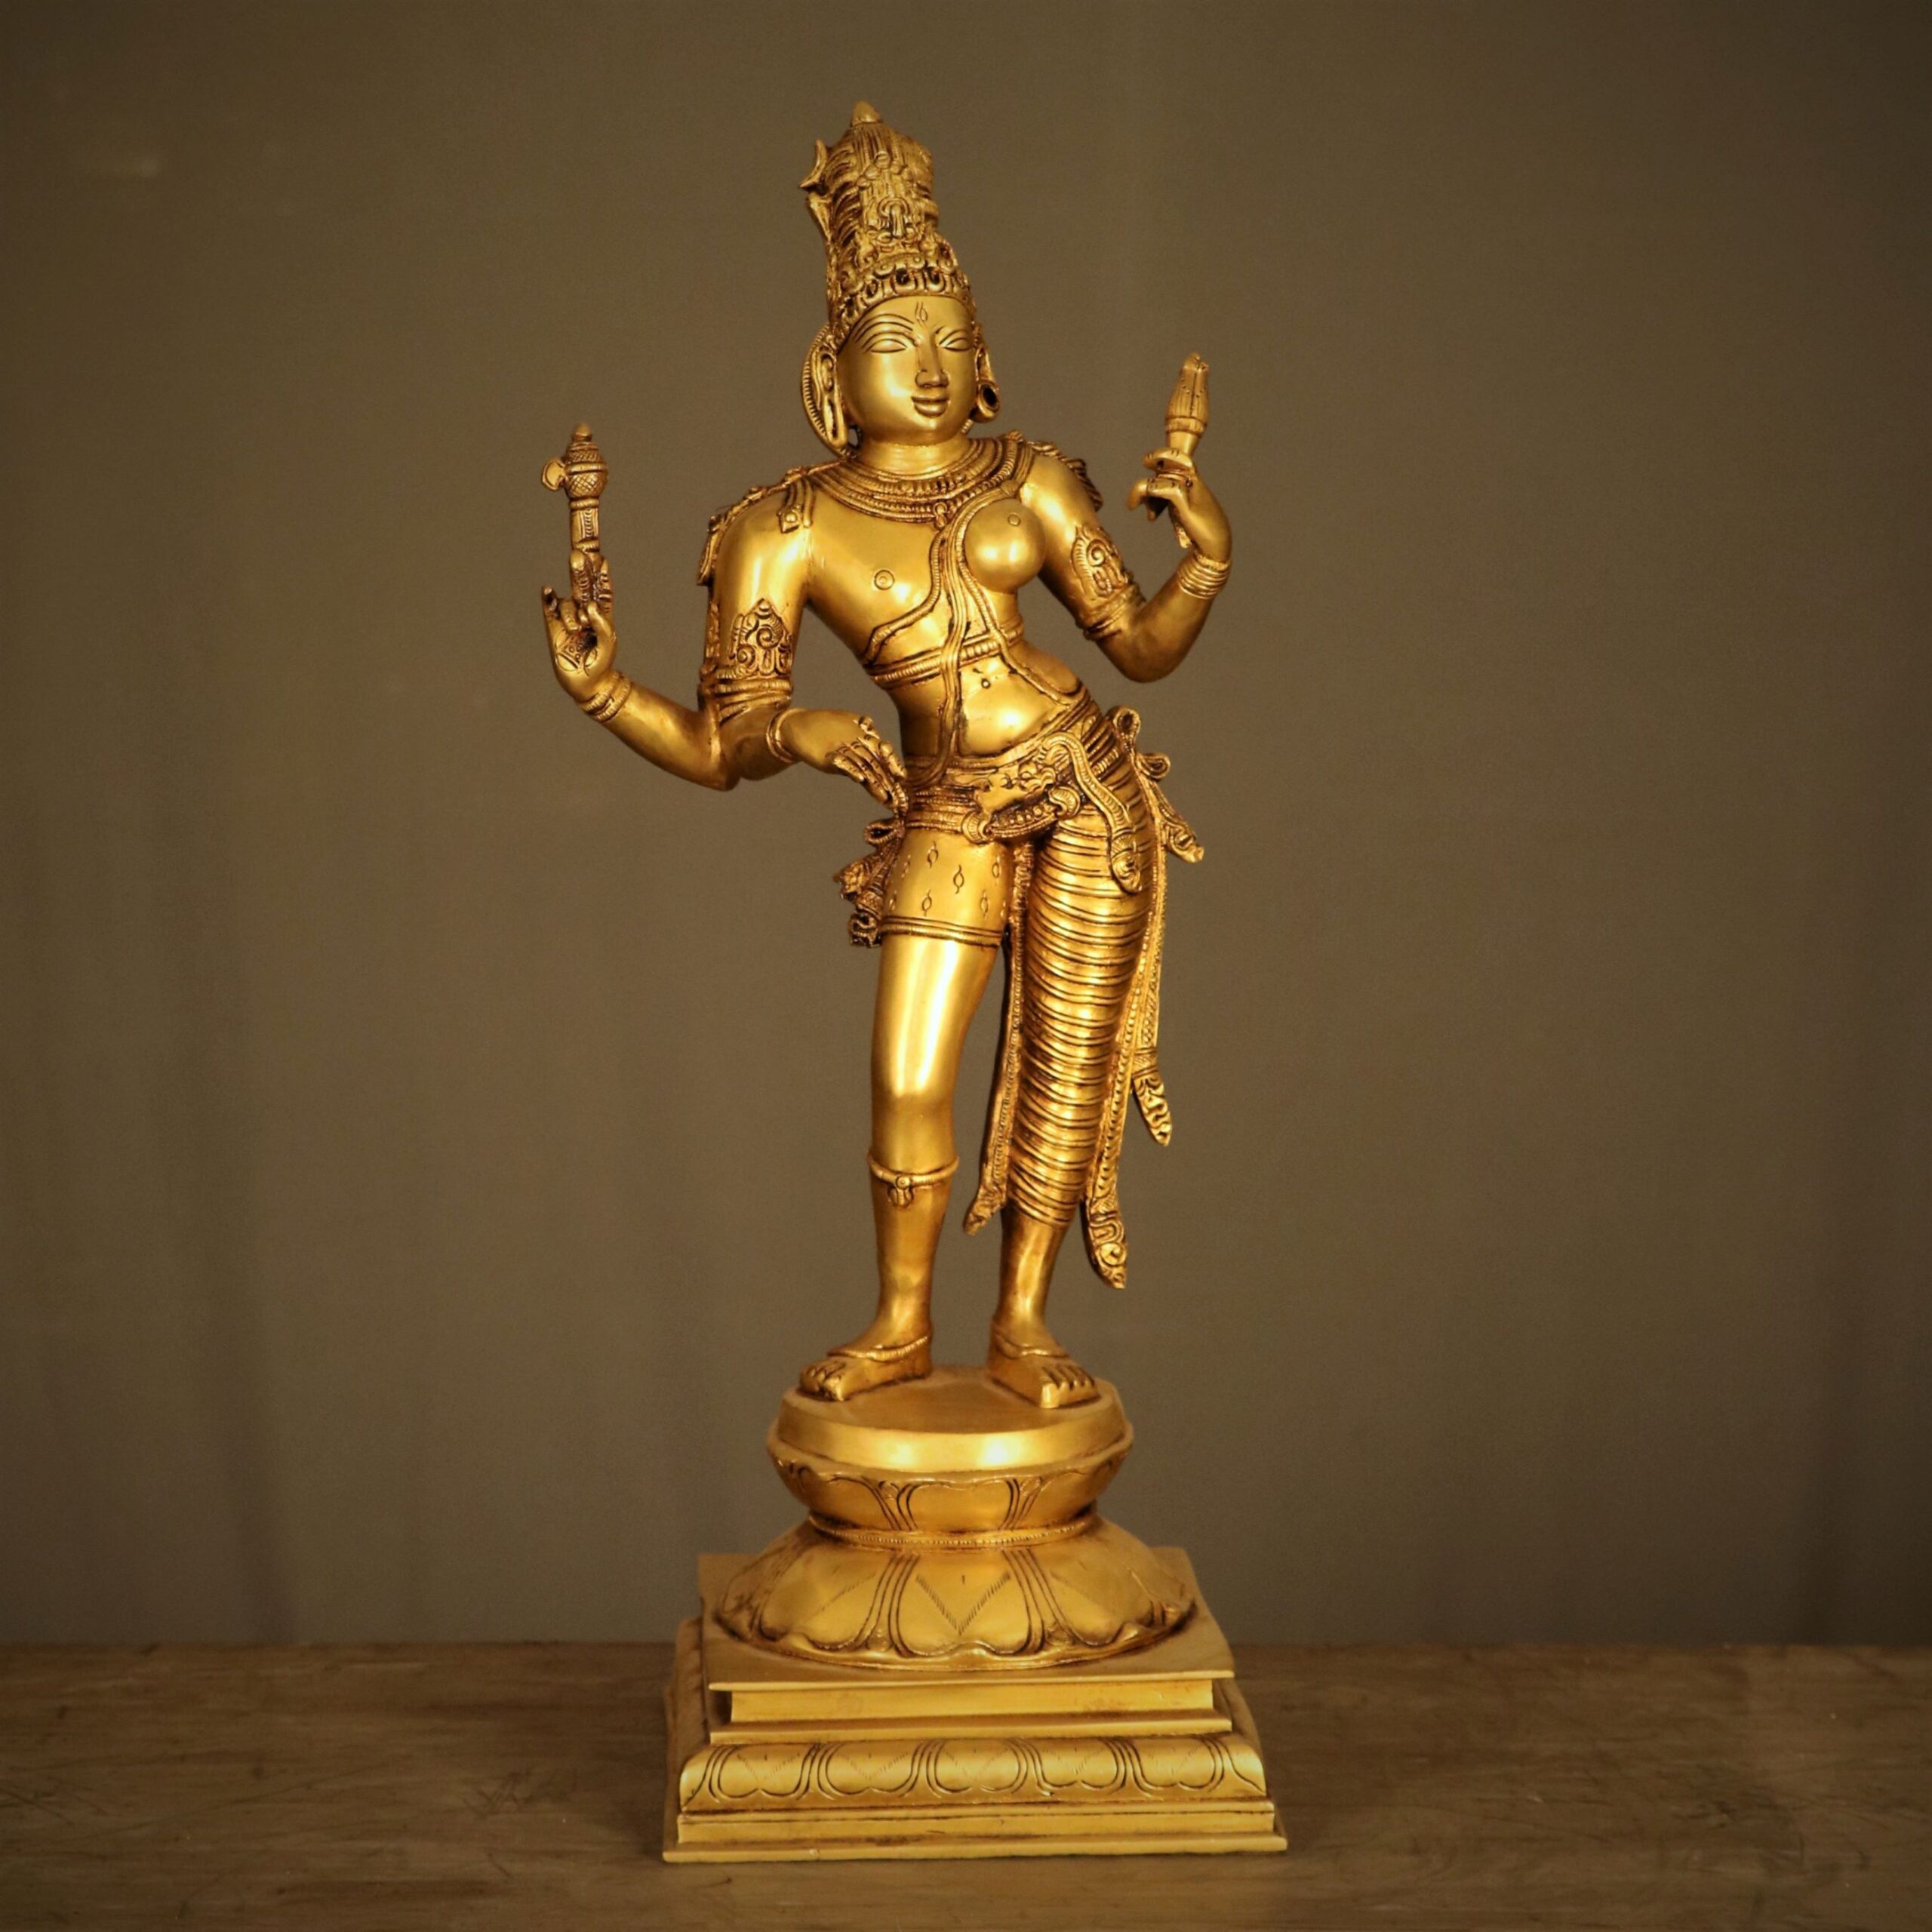 https://www.gangeswave.com/wp-content/uploads/2021/06/ardhanariswar_brass_statue.jpg